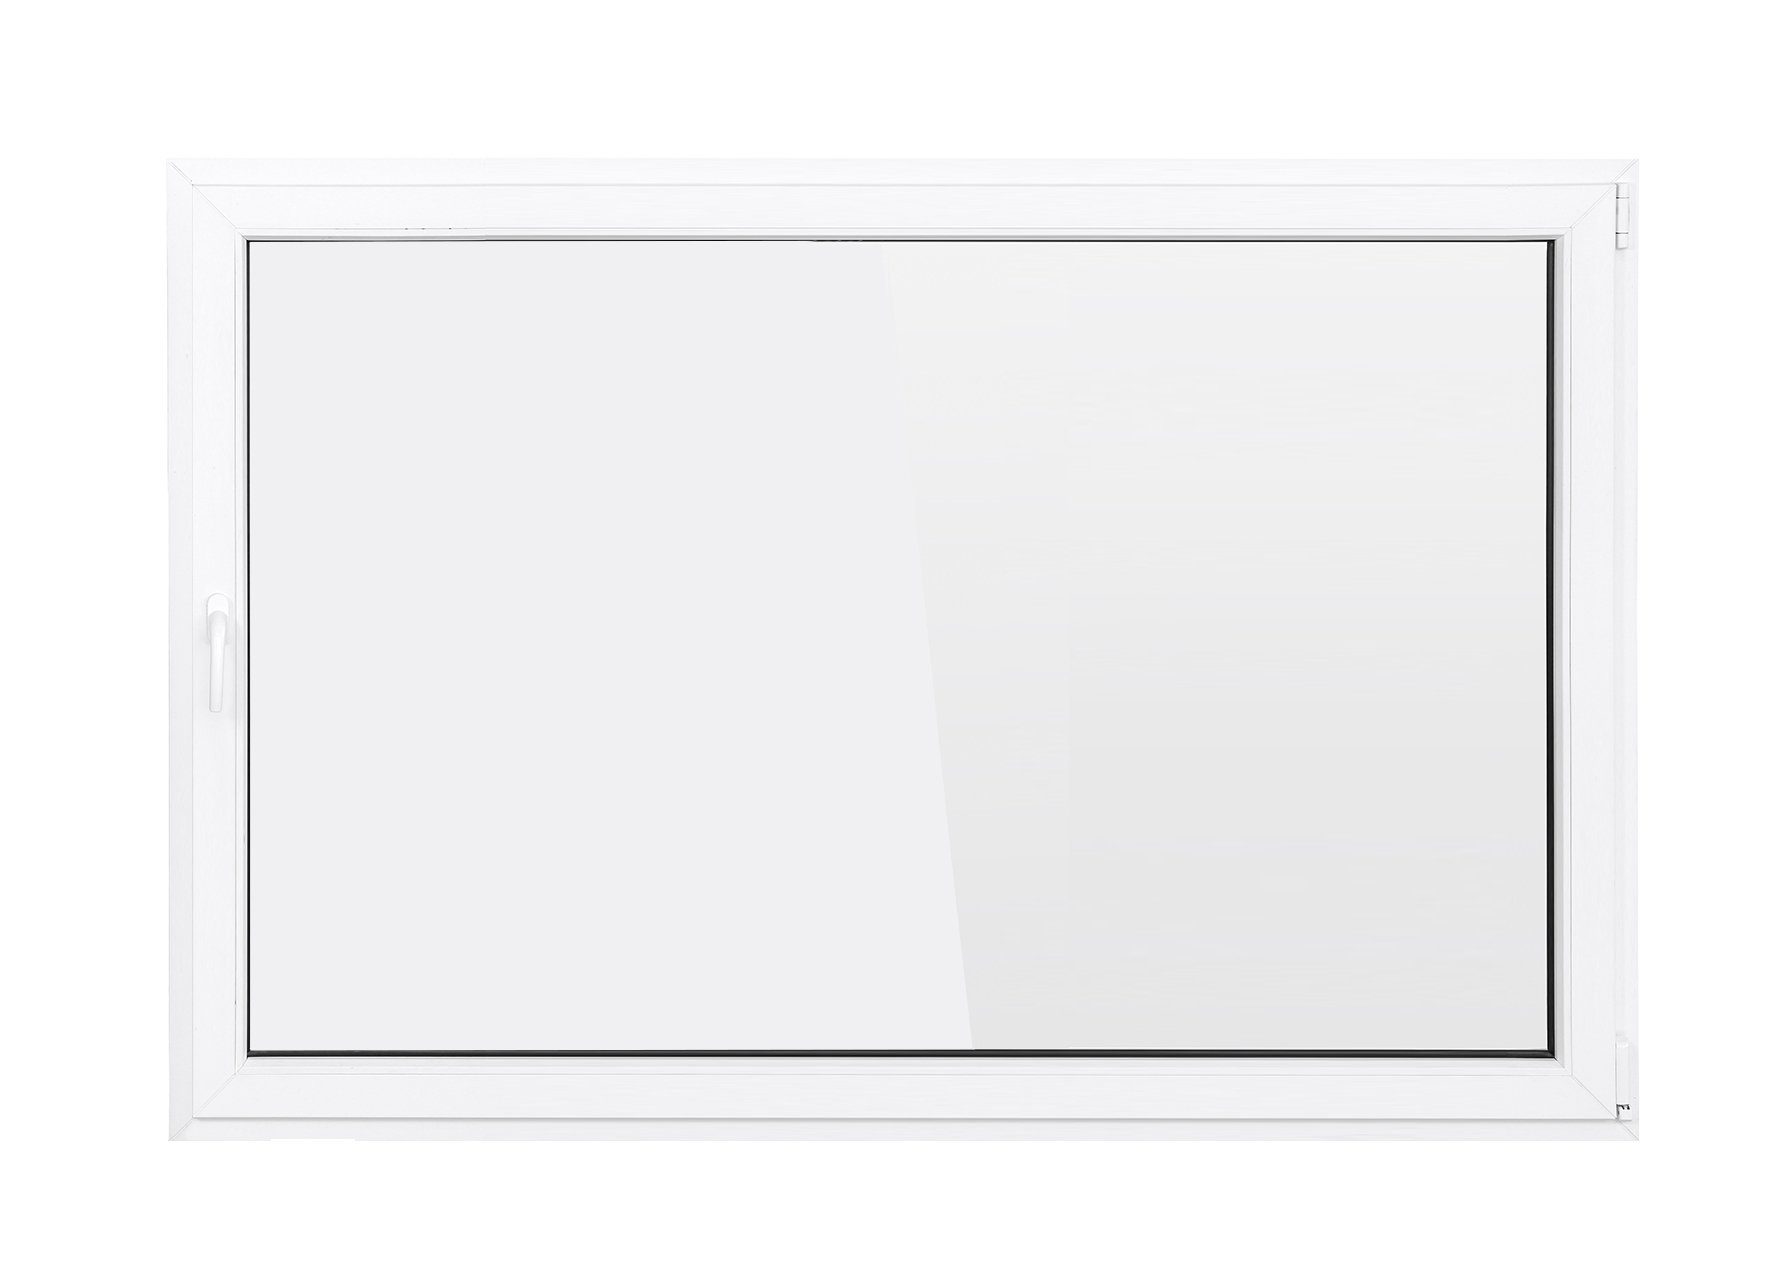 mm DECO 5-Kammer-Profil Hochwertiges GROUP Verglasung 900x600 weiß 1 Sicherheitsbeschlag, Dreh-Kipp SN Flügel (Set), Profil, 70 Kellerfenster RC2 2-fach